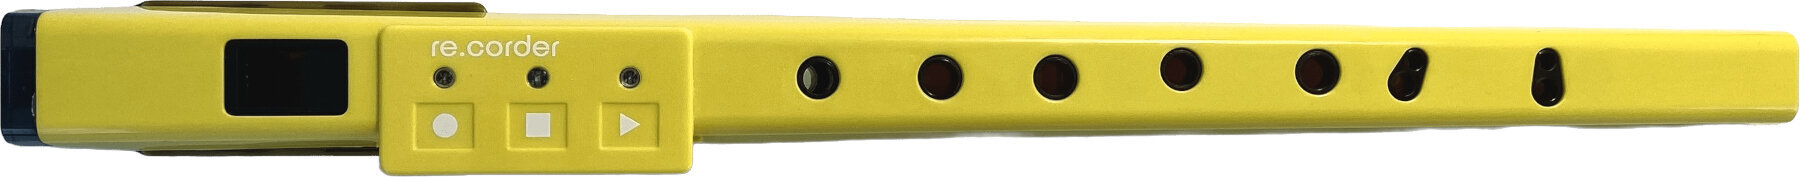 Wind MIDI Controller Artinoise Re.corder Yellow